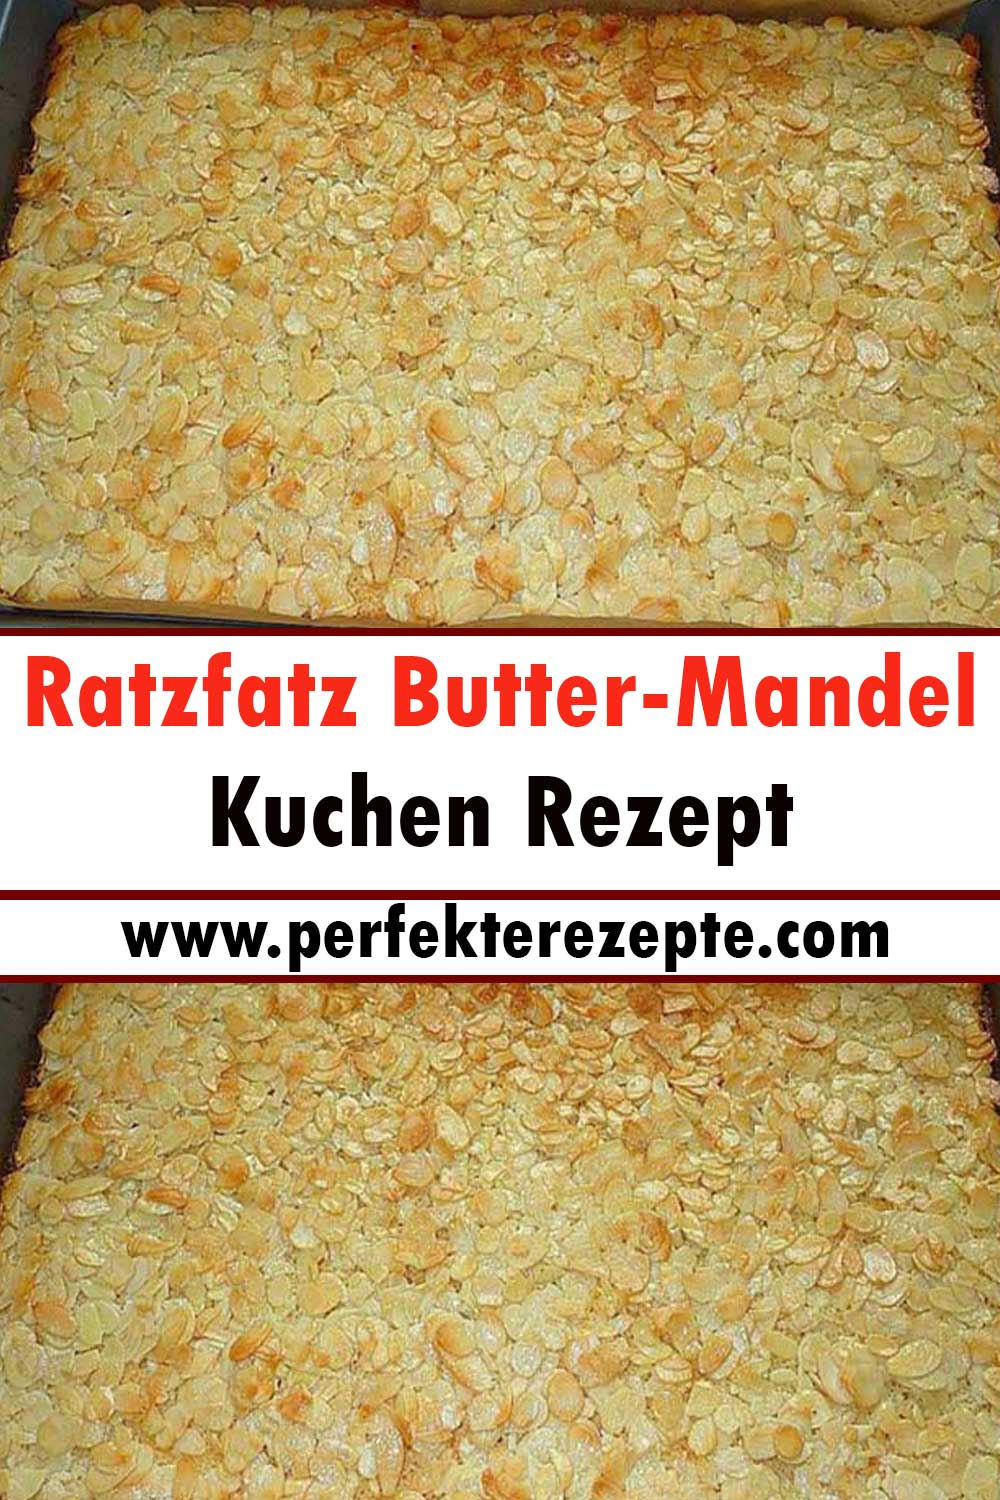 Ratzfatz Butter-Mandel-Kuchen Rezept